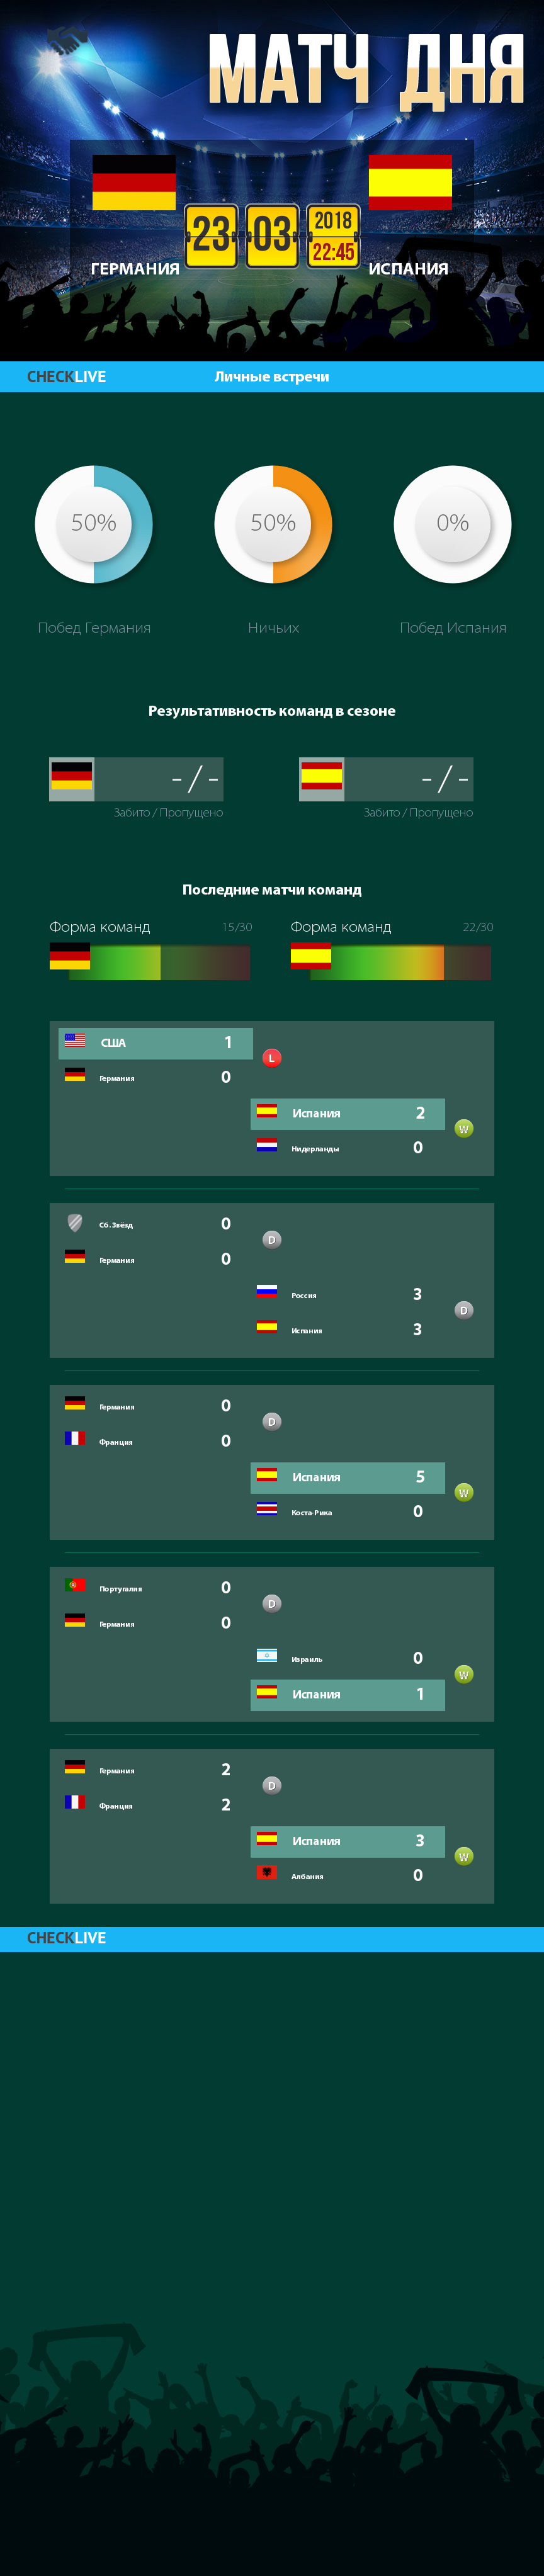 Инфографика Германия и Испания матч дня 23.03.2018